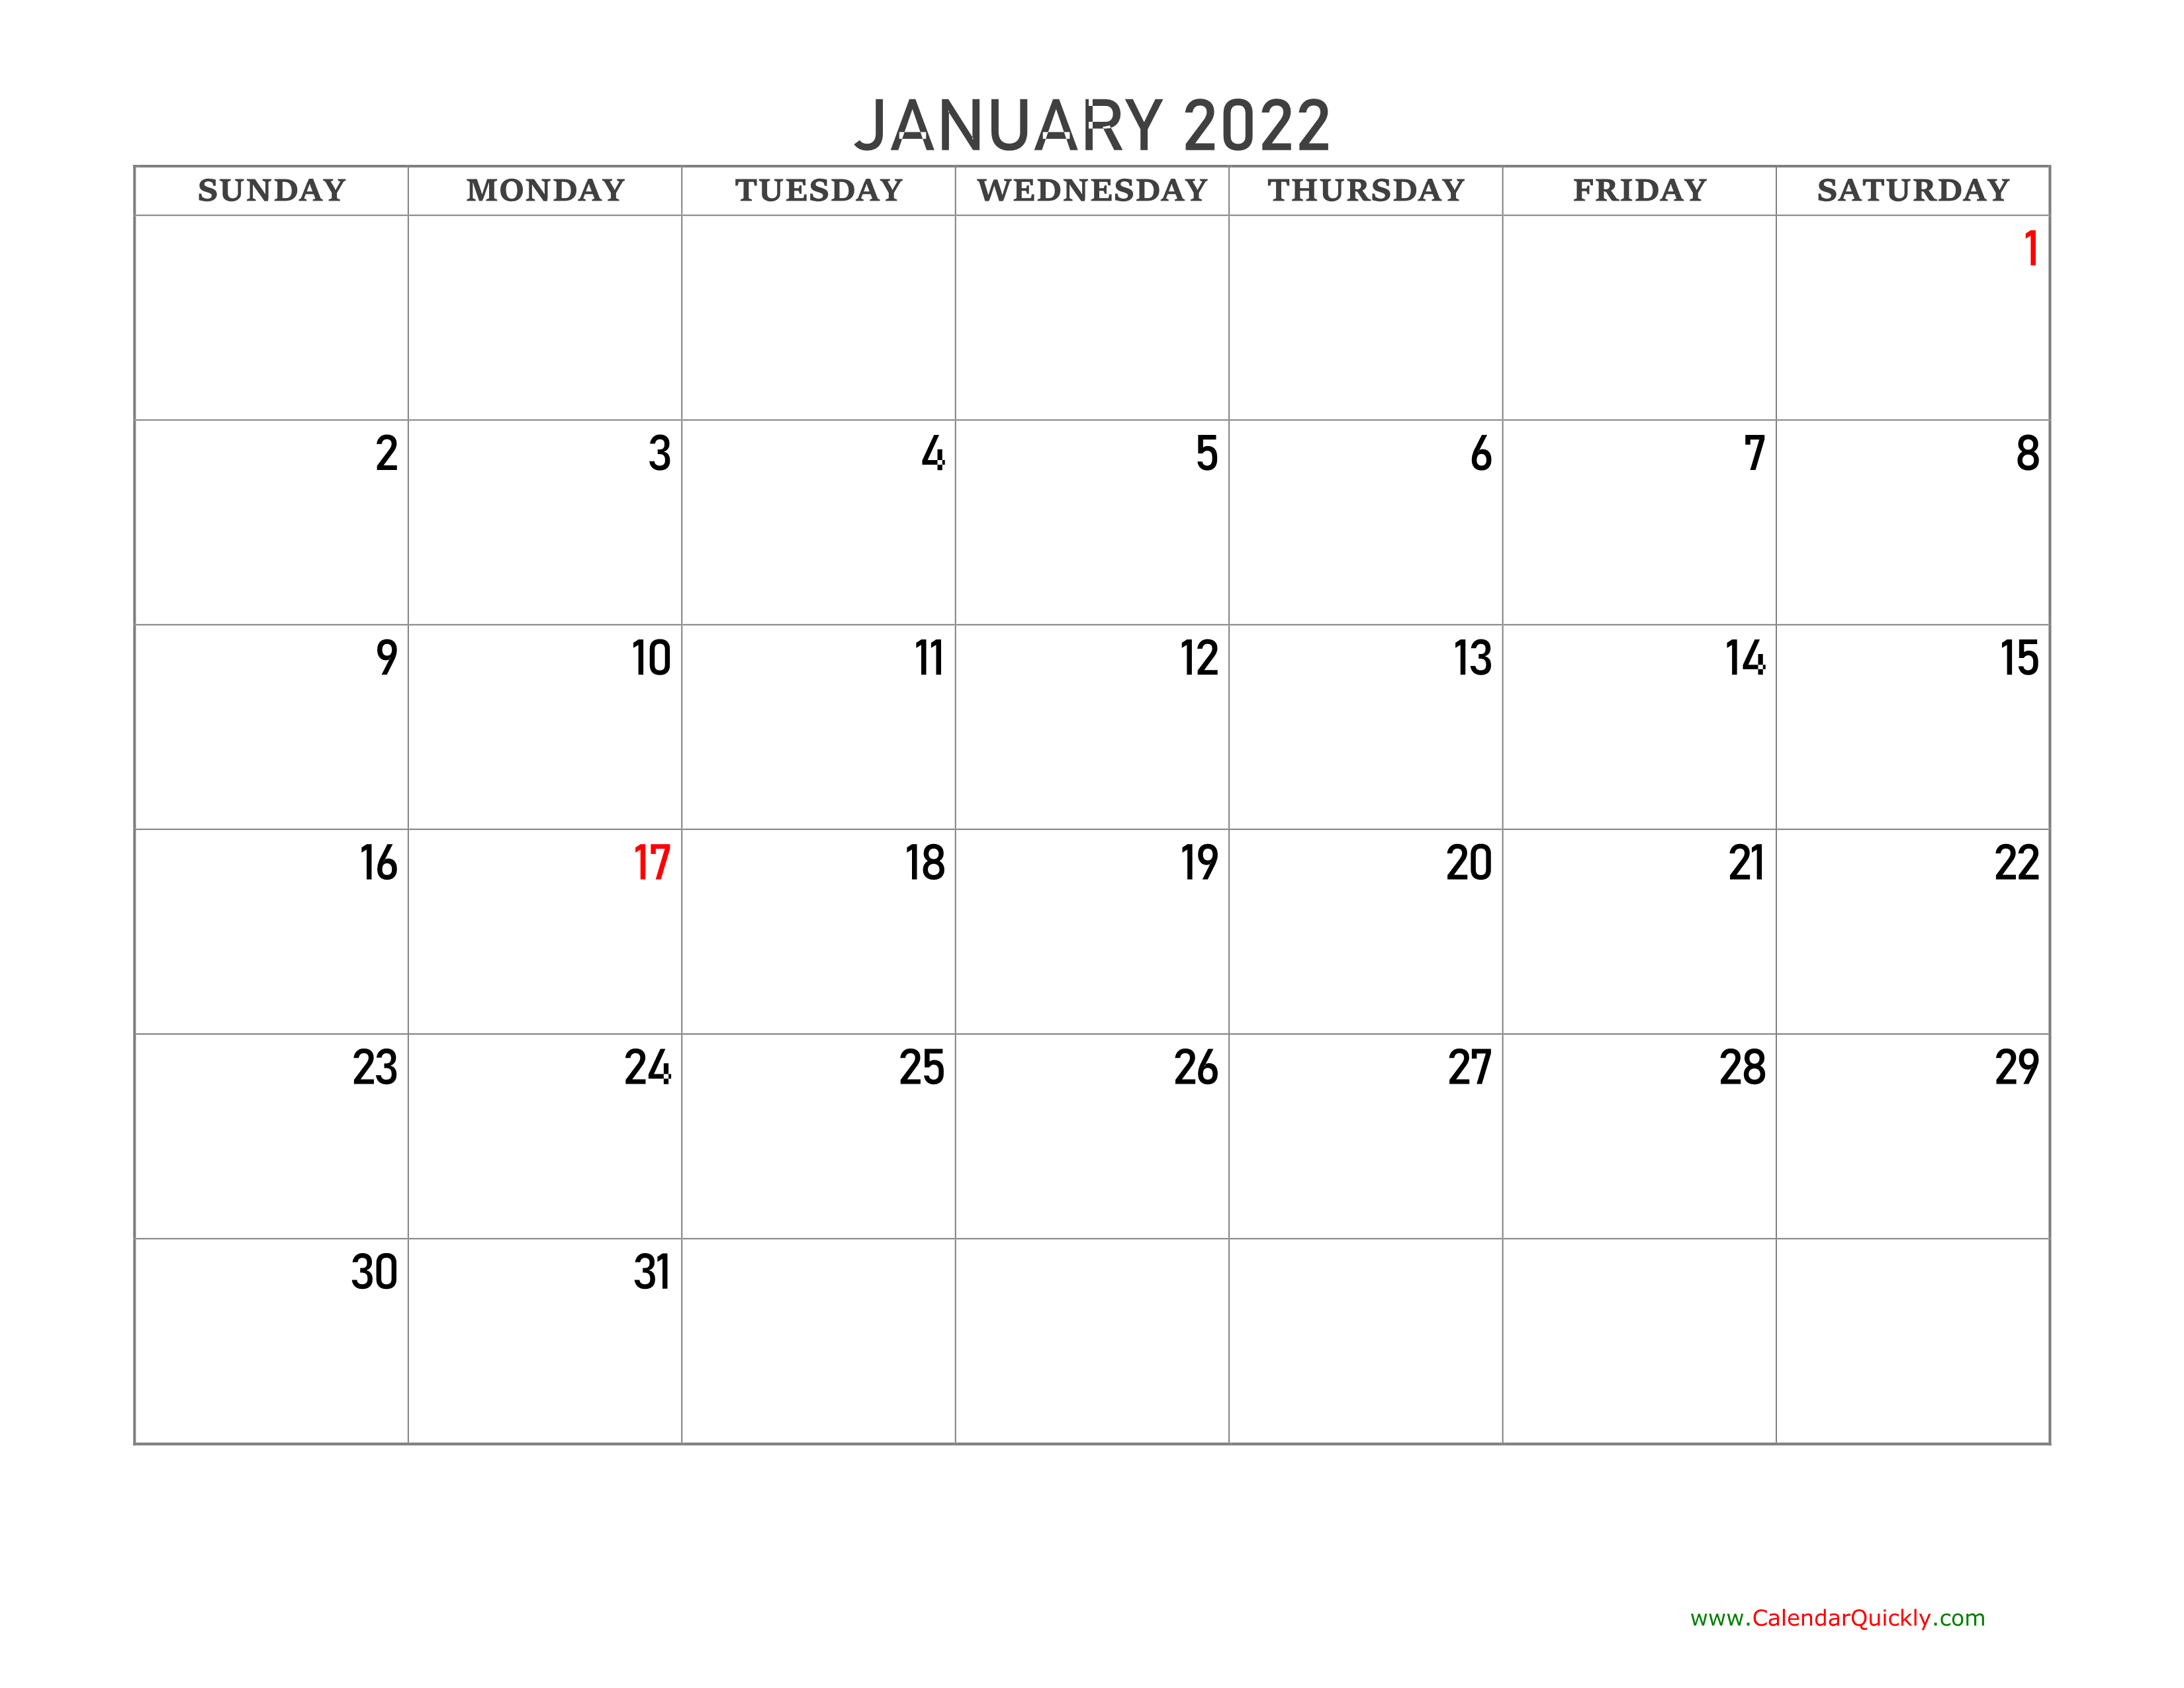 monthly 2022 blank calendar calendar quickly 2022 monthly calendar